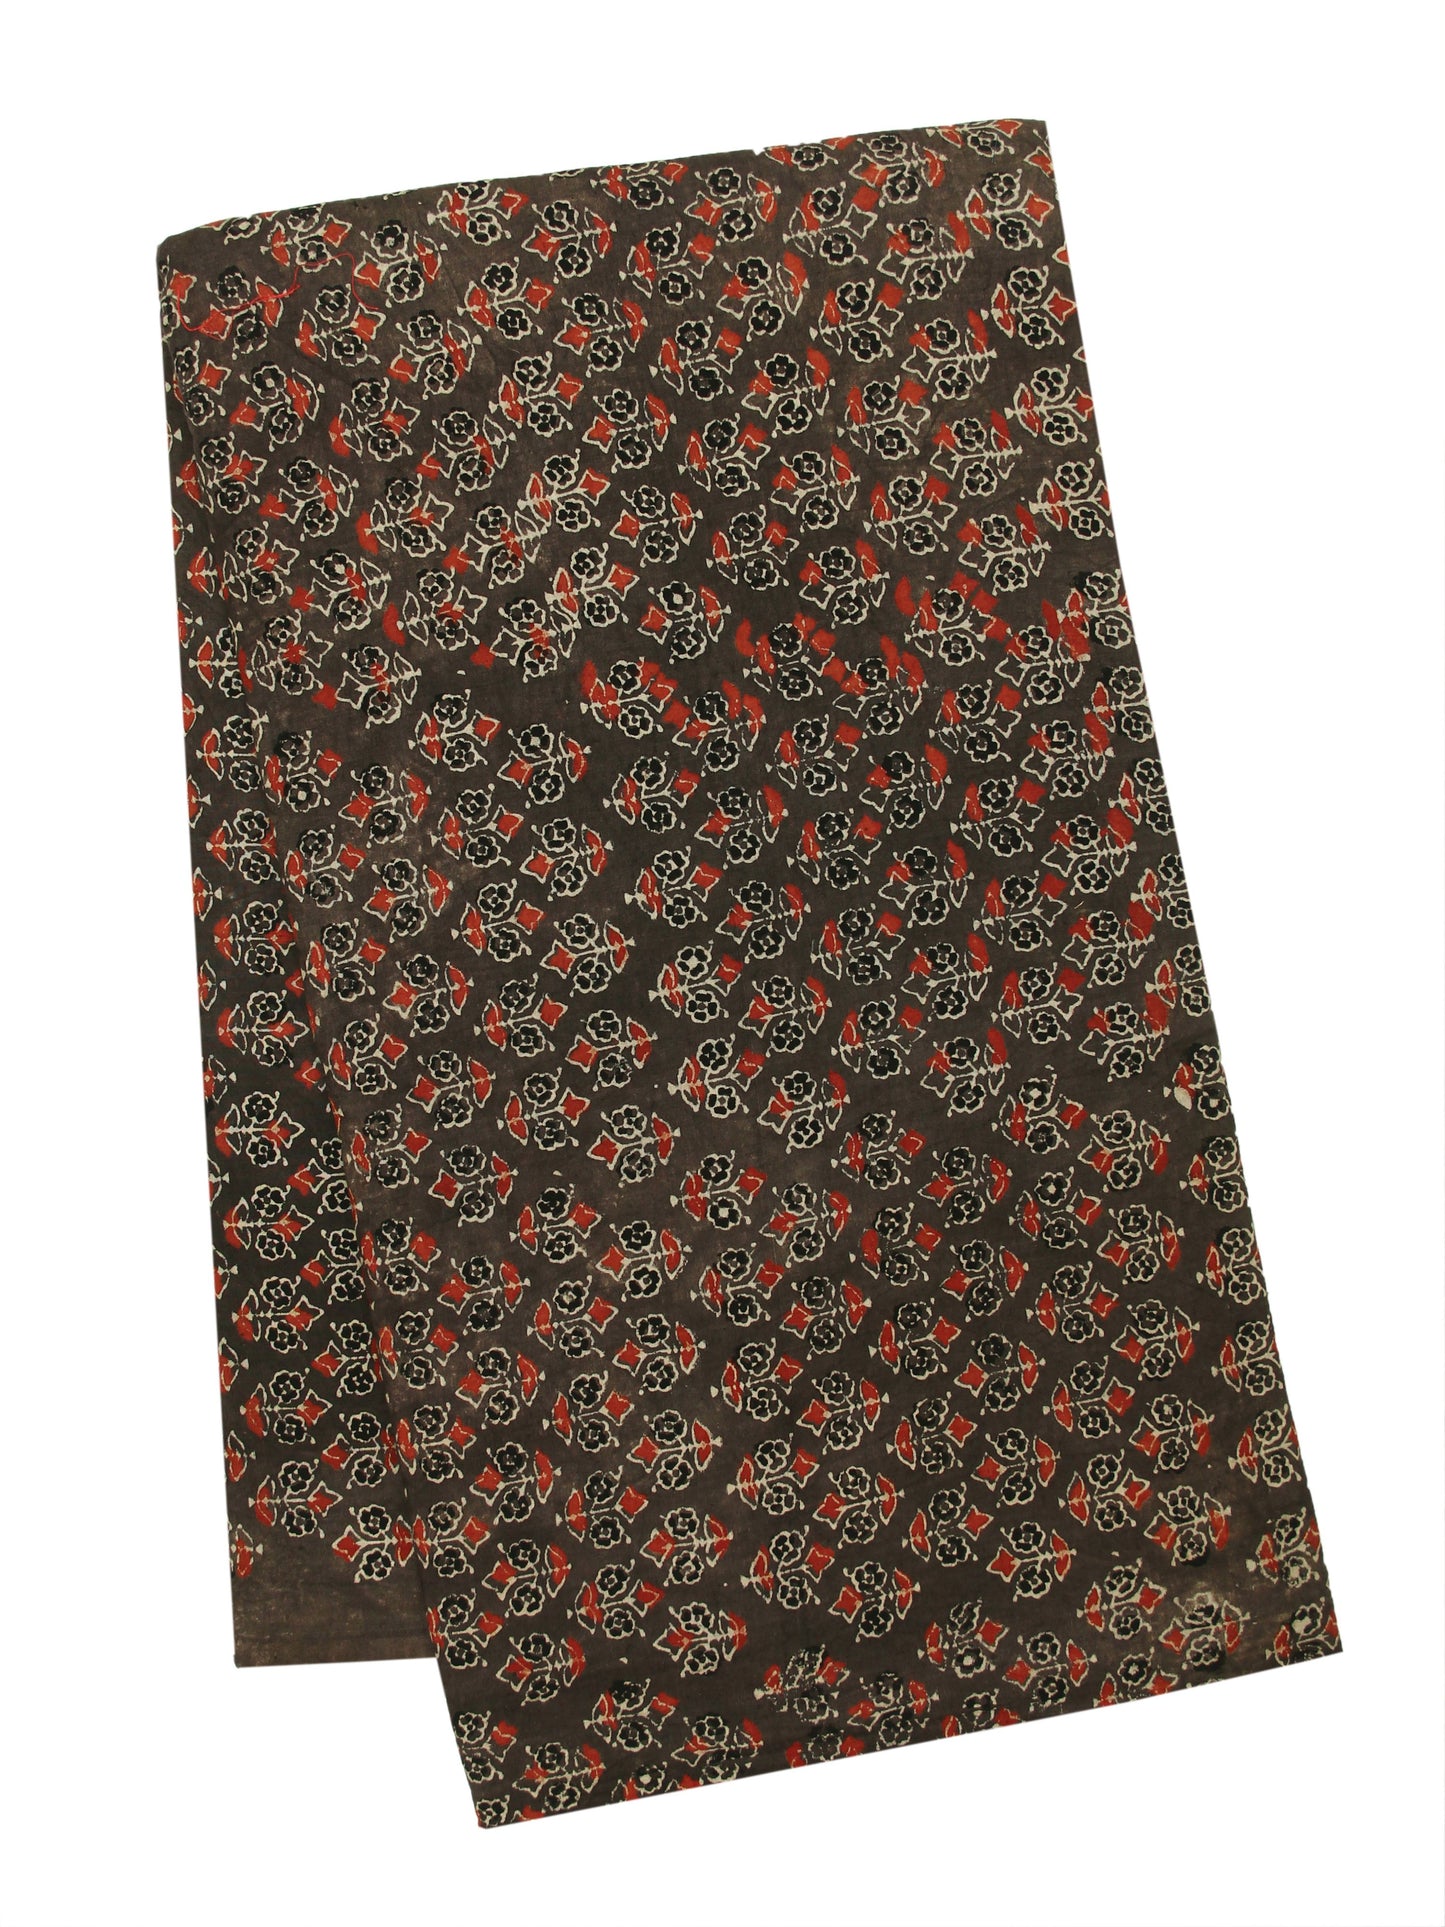 Brown ajrakh print fabric in cotton, Ajrakh hand block print fabric in brown color, Handmade fabrics